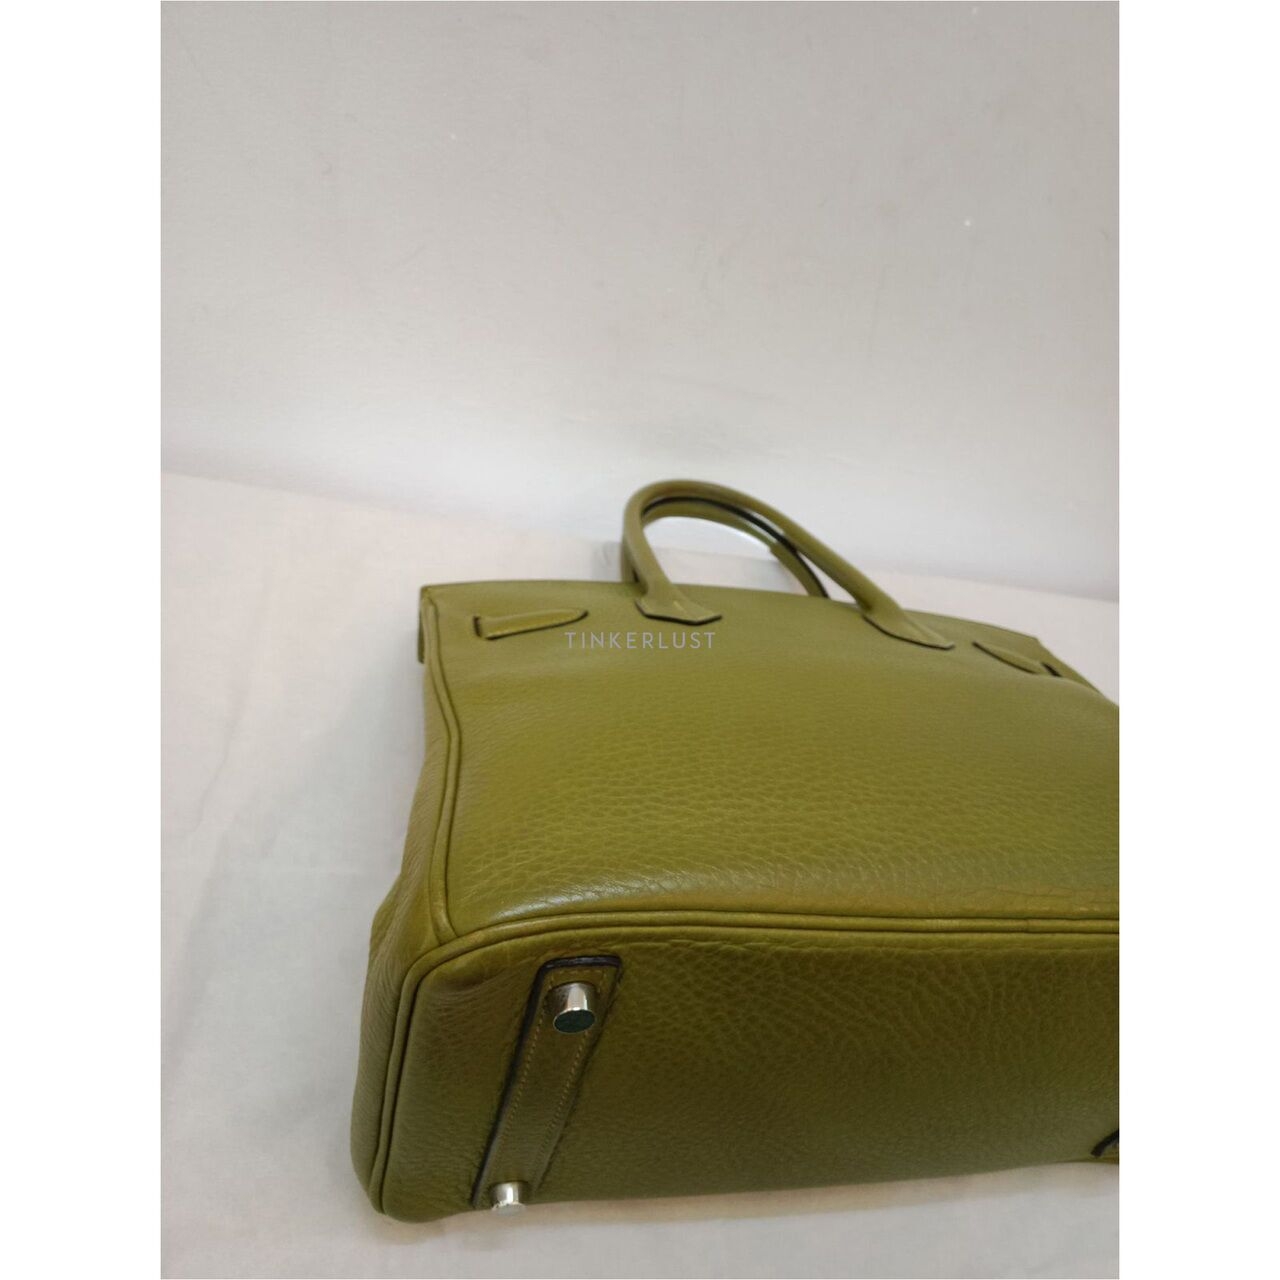 Hermes Birkin 30 Vert Chartreuse #J 2006 PHW Handbag